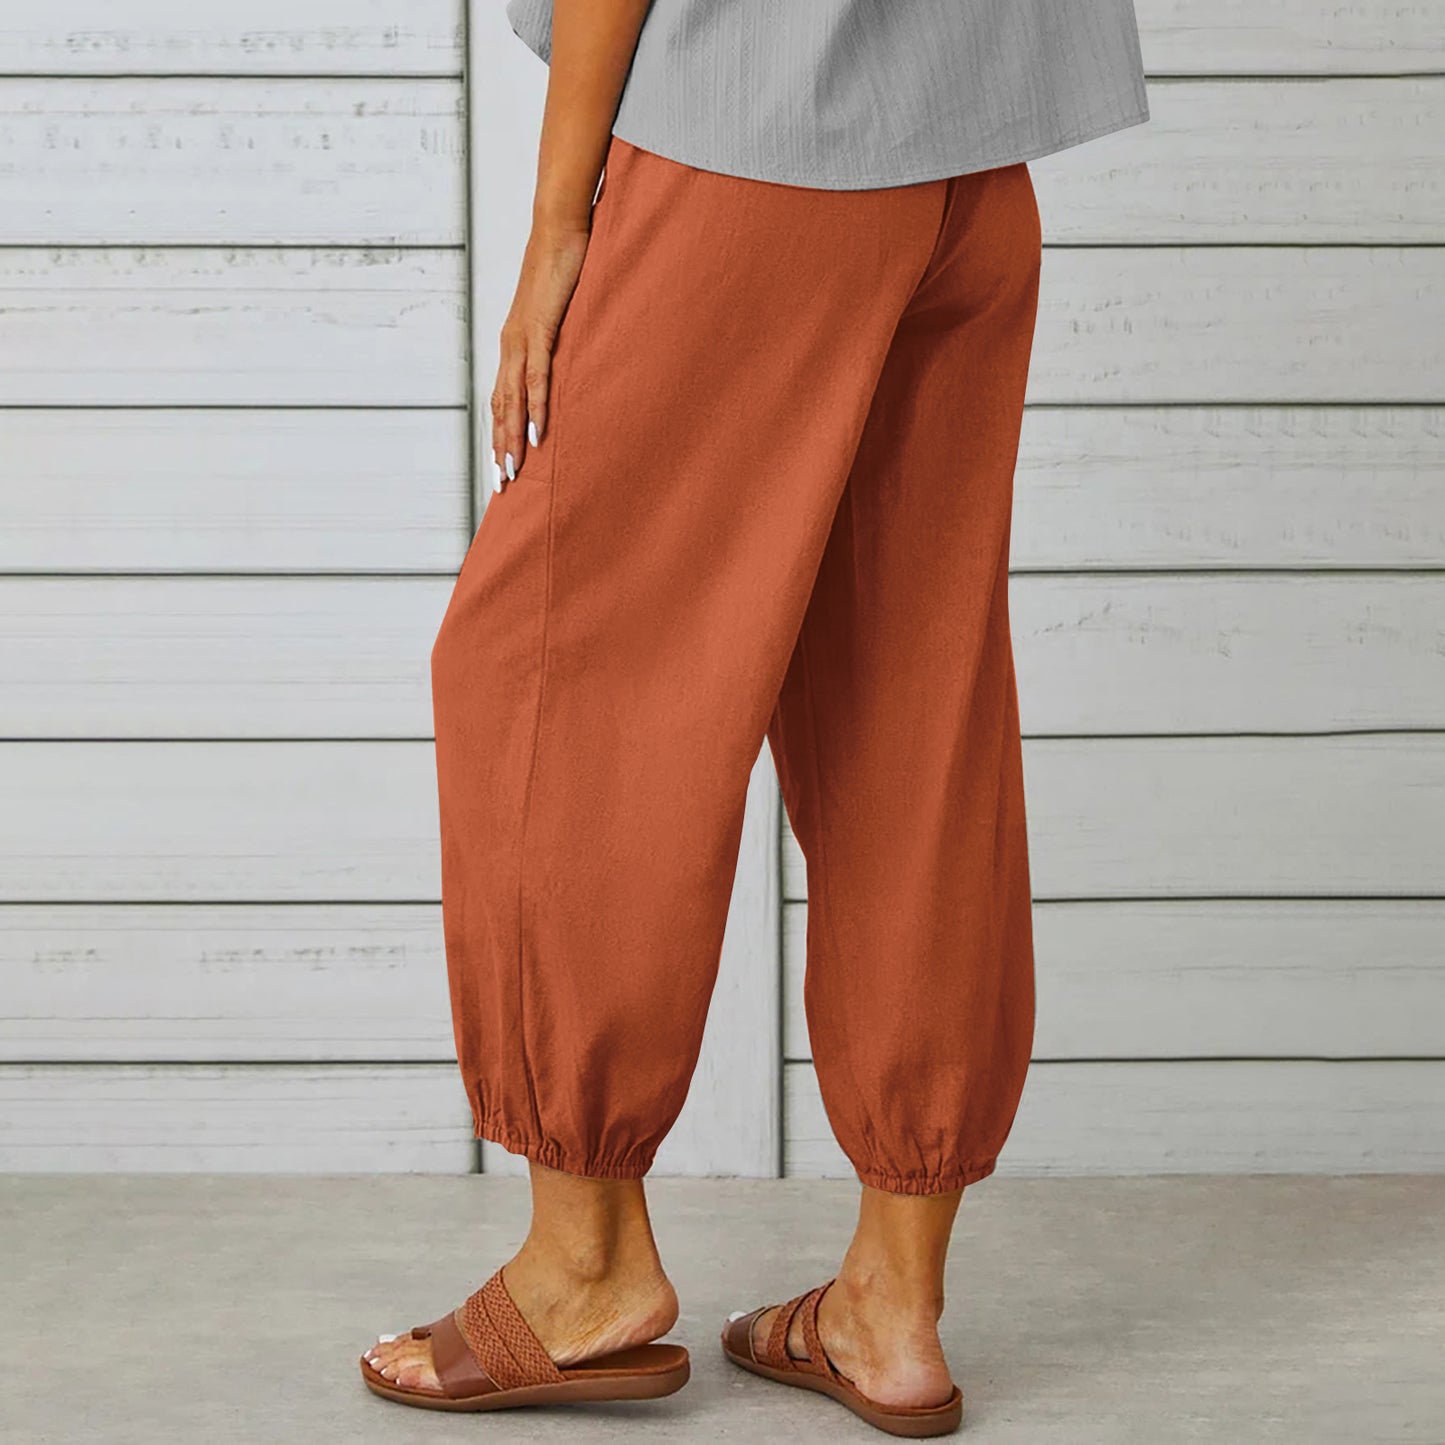 Cotton and Linen Summer Pants